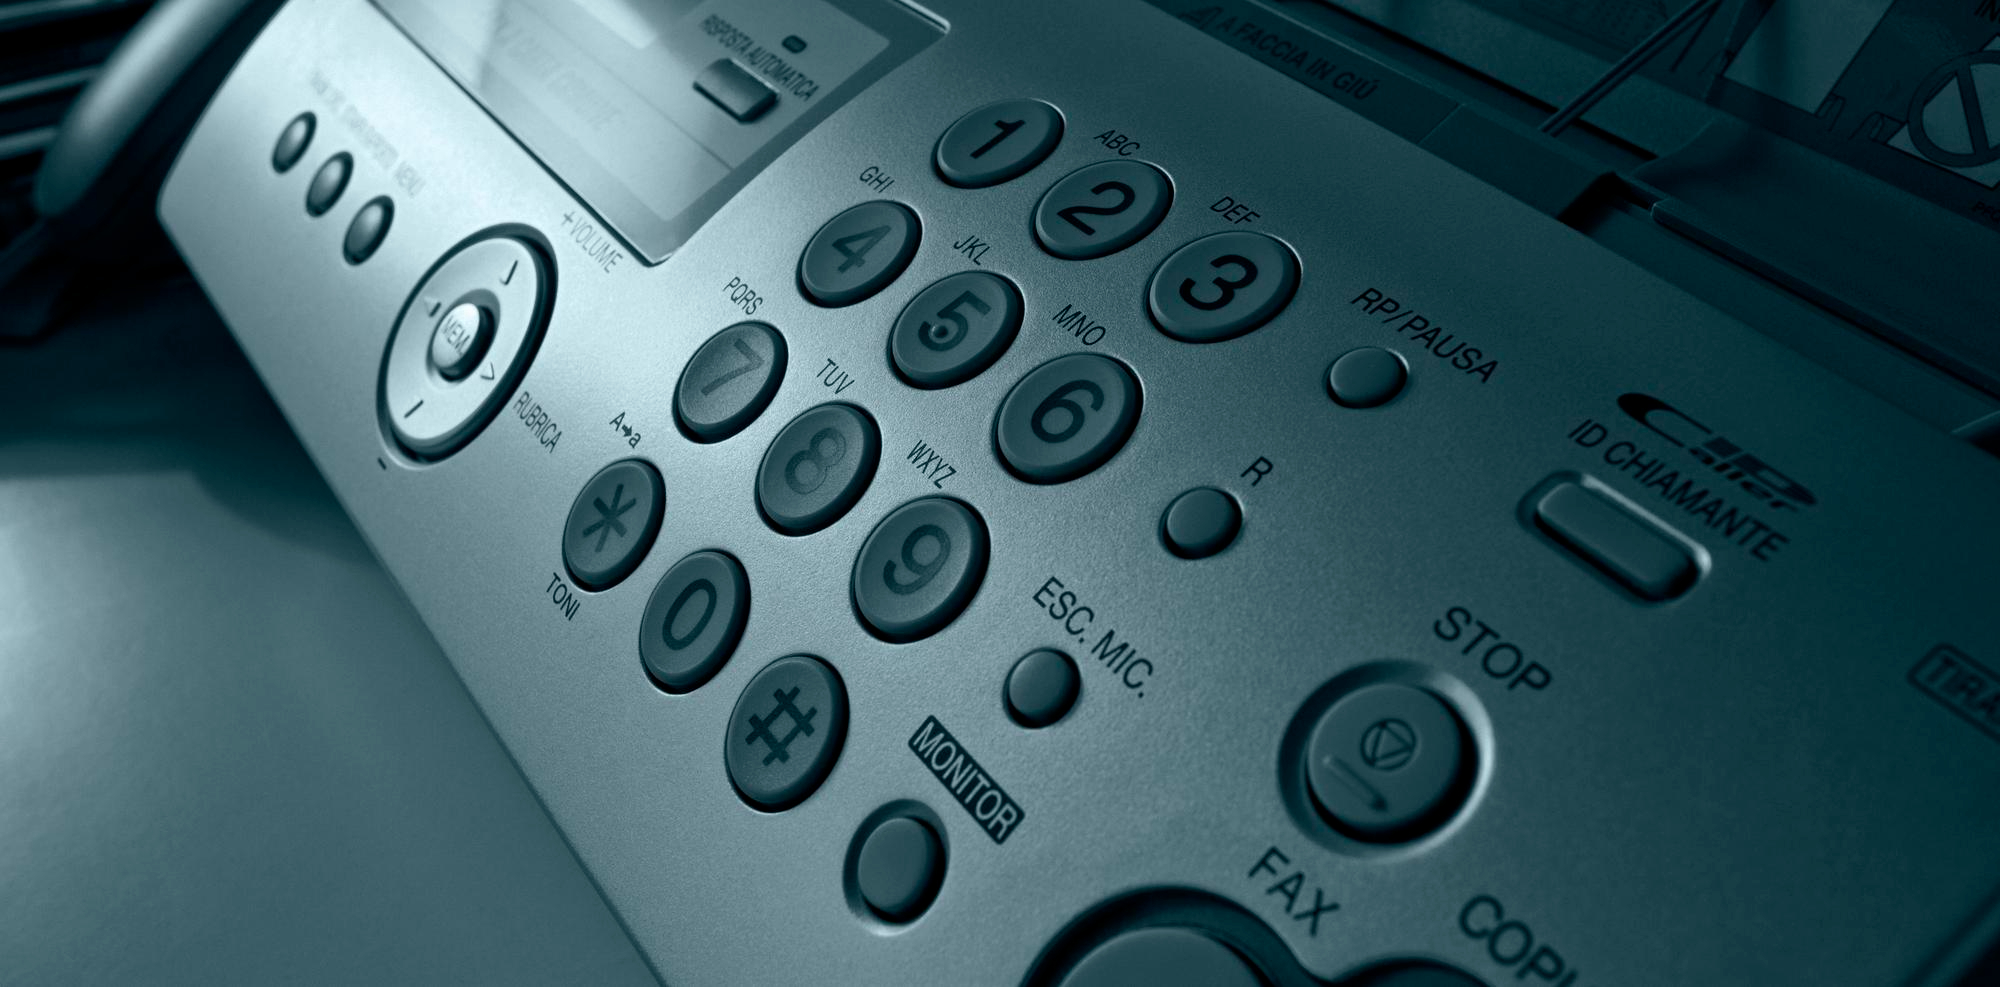 Close-up view of fax machine keypad.